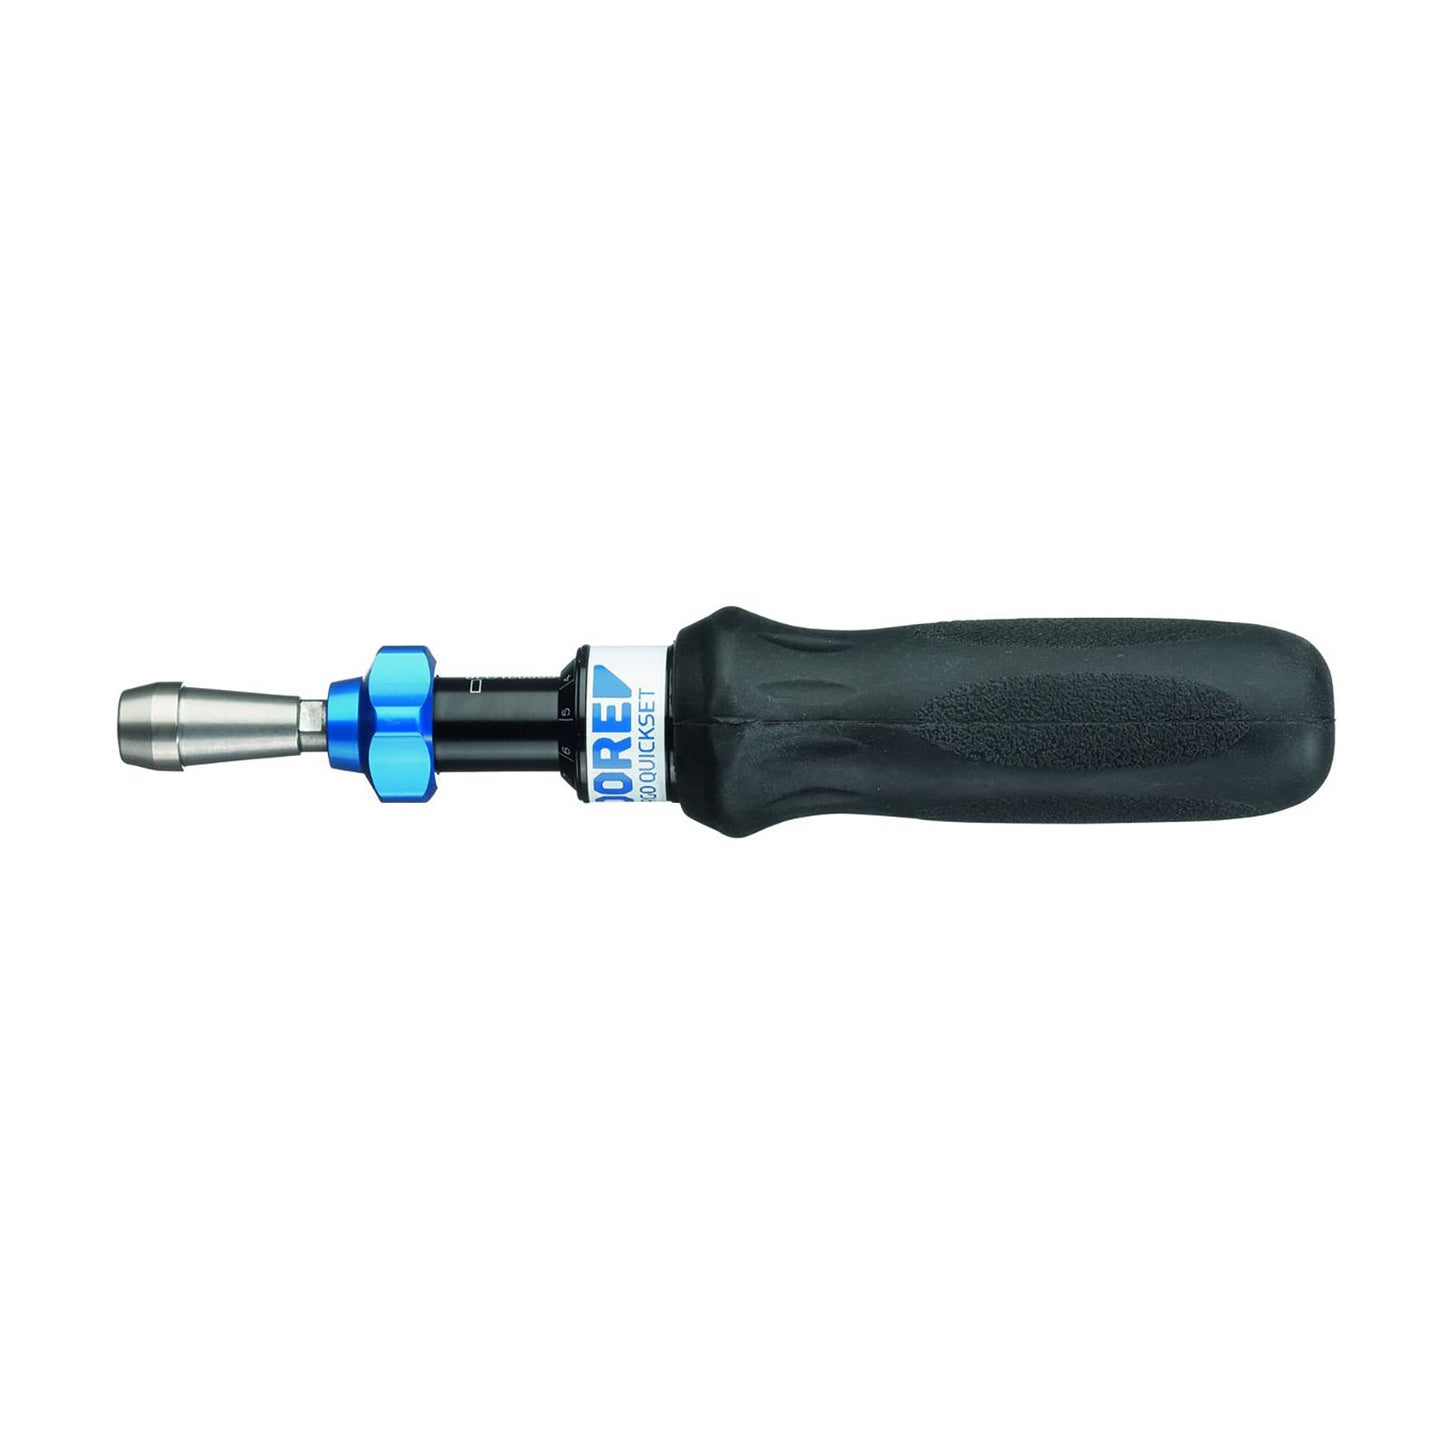 GEDORE QSN 120 FH - S 1/4" screwdriver 24-140cN.m. (1400150)